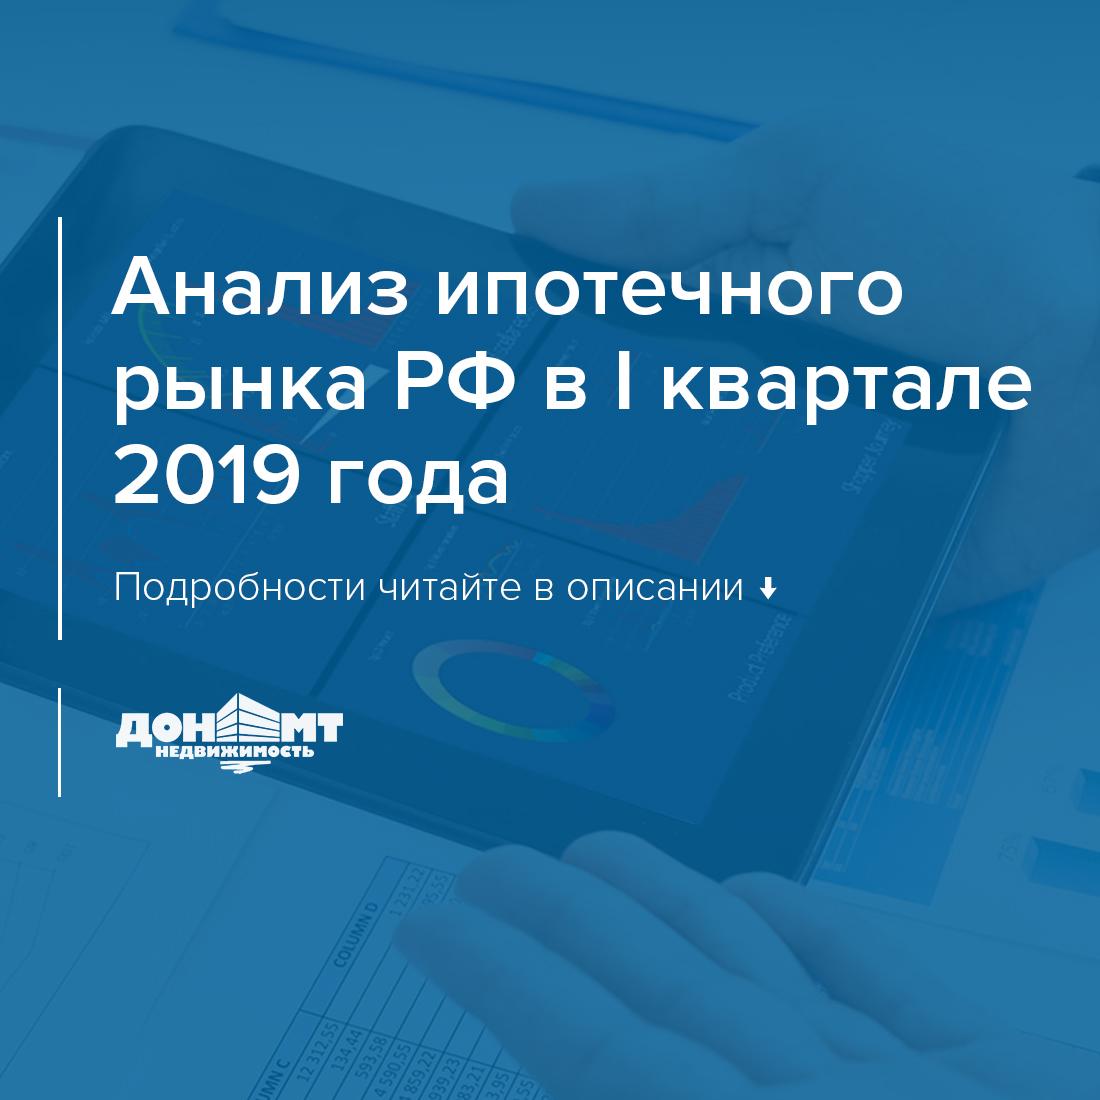 Анализ ипотечного рынка РФ в I квартале 2019 года